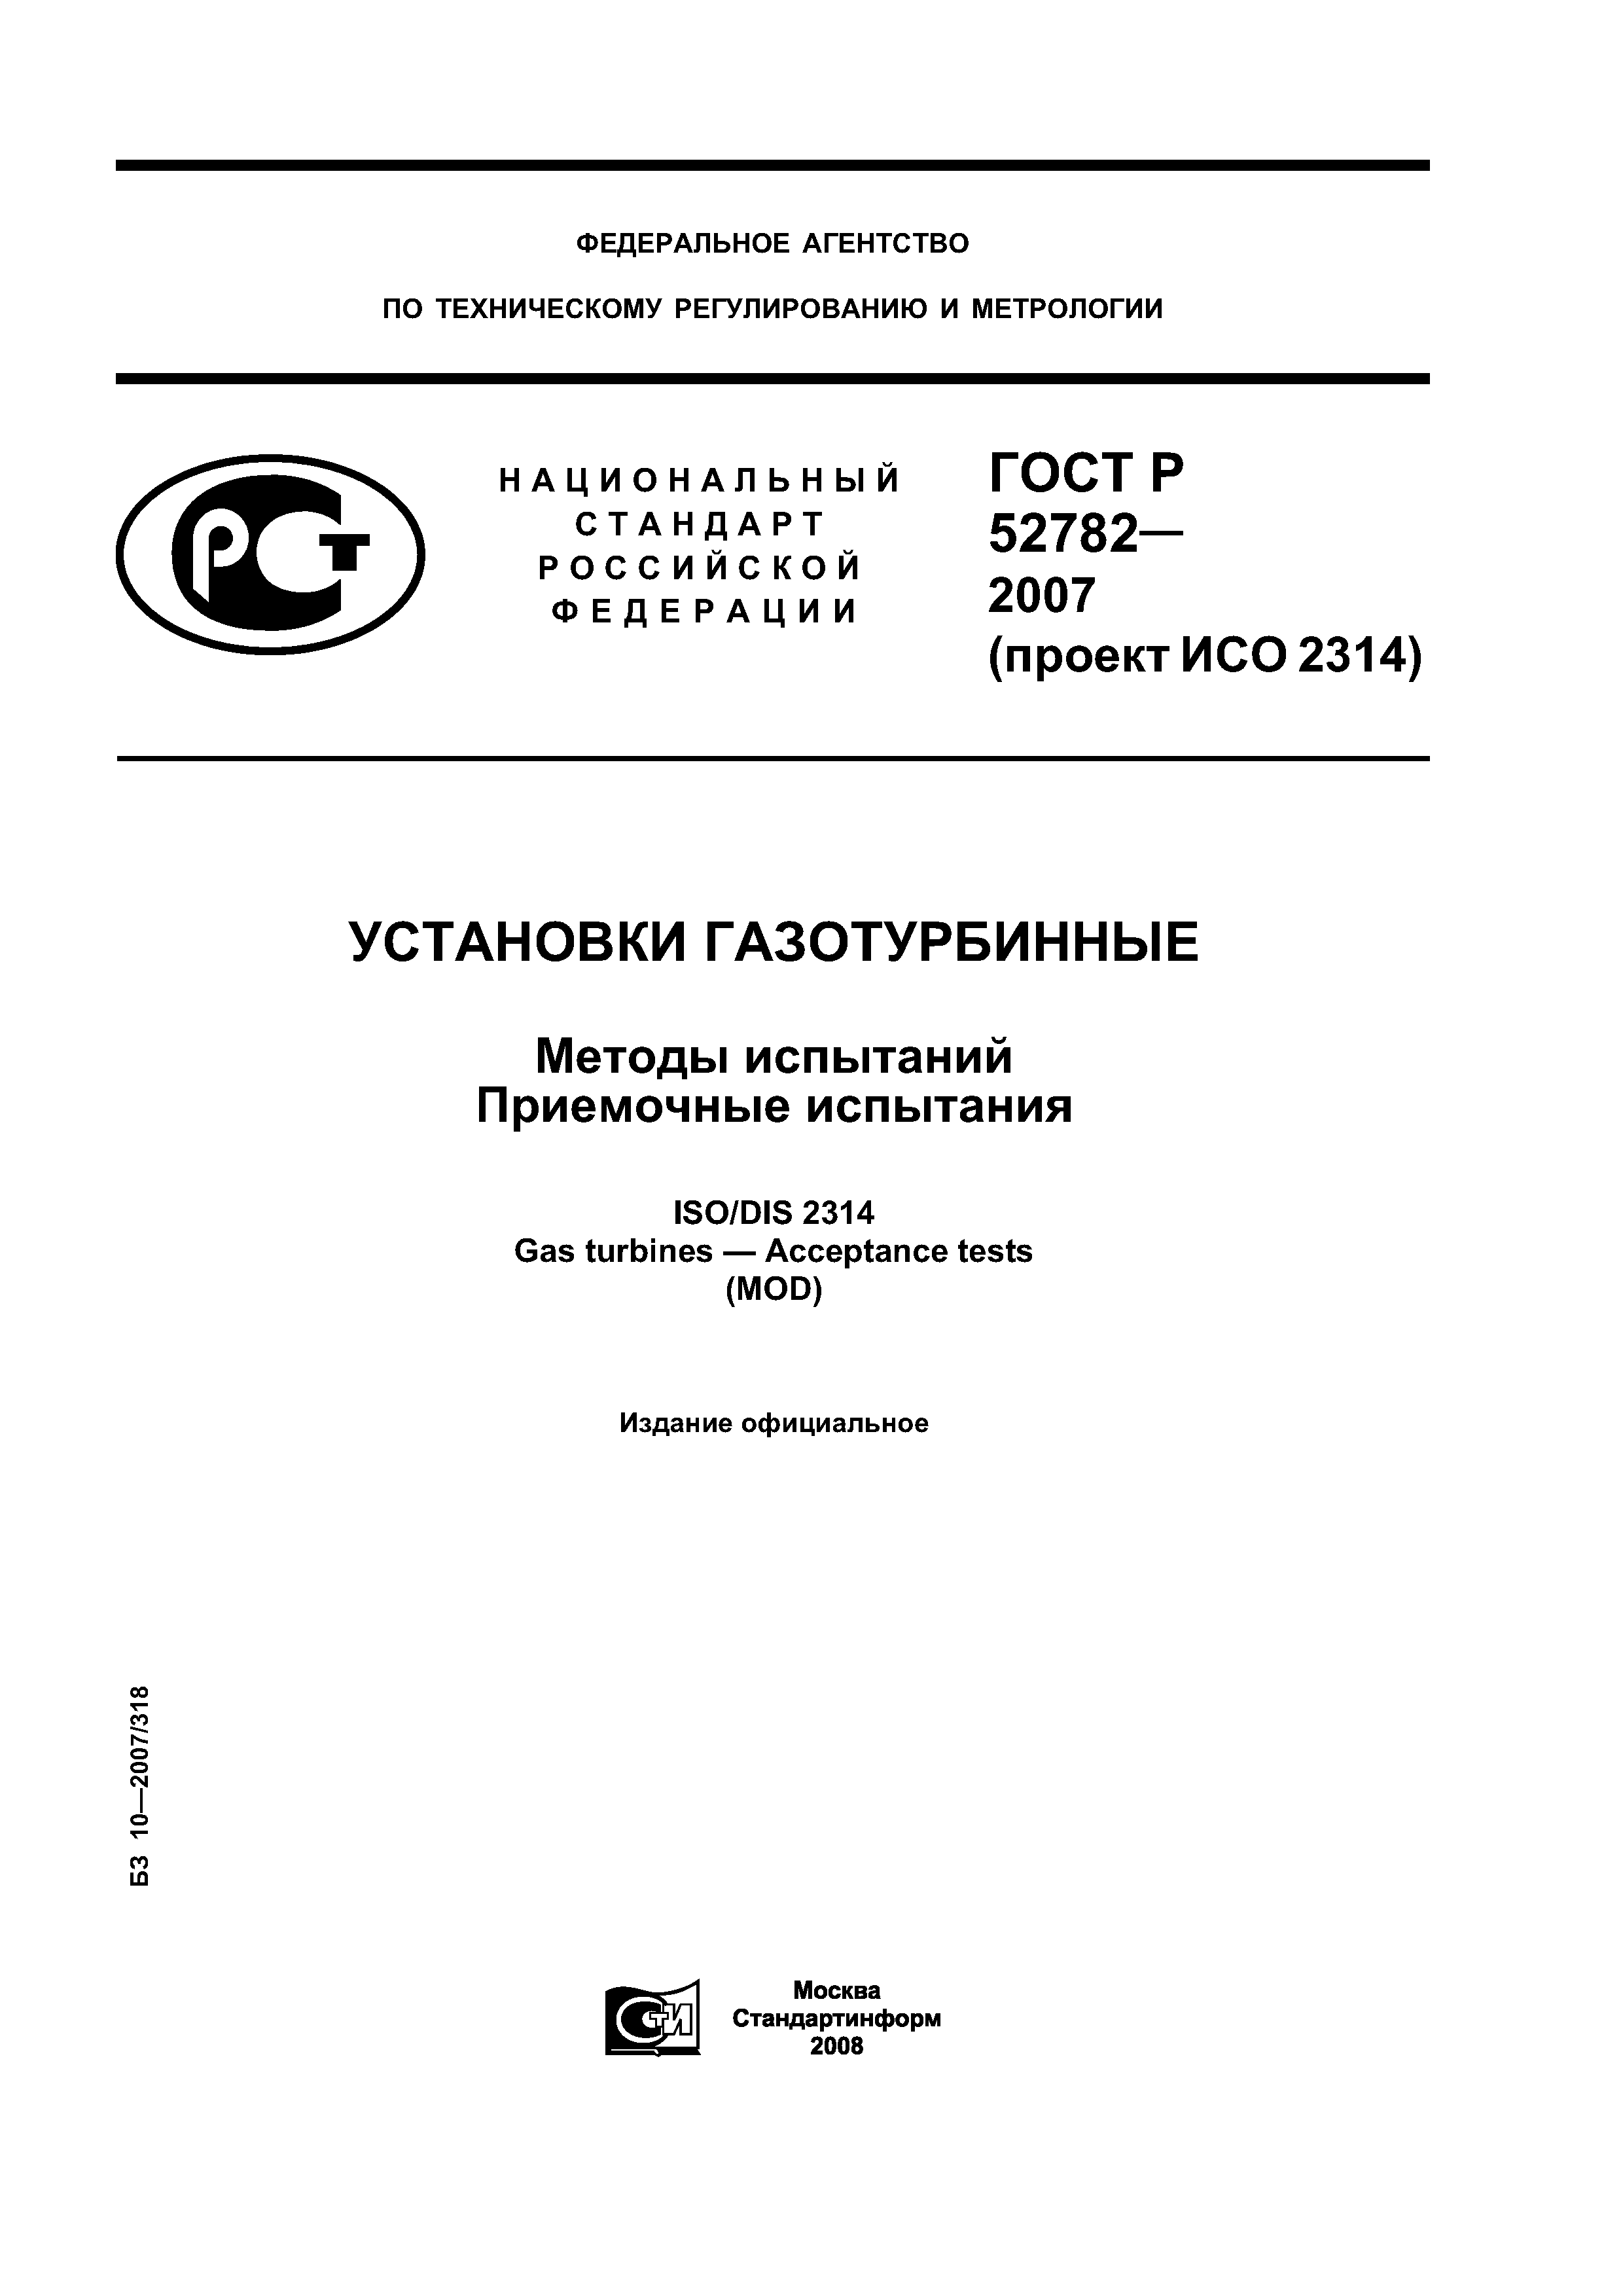 ГОСТ Р 52782-2007